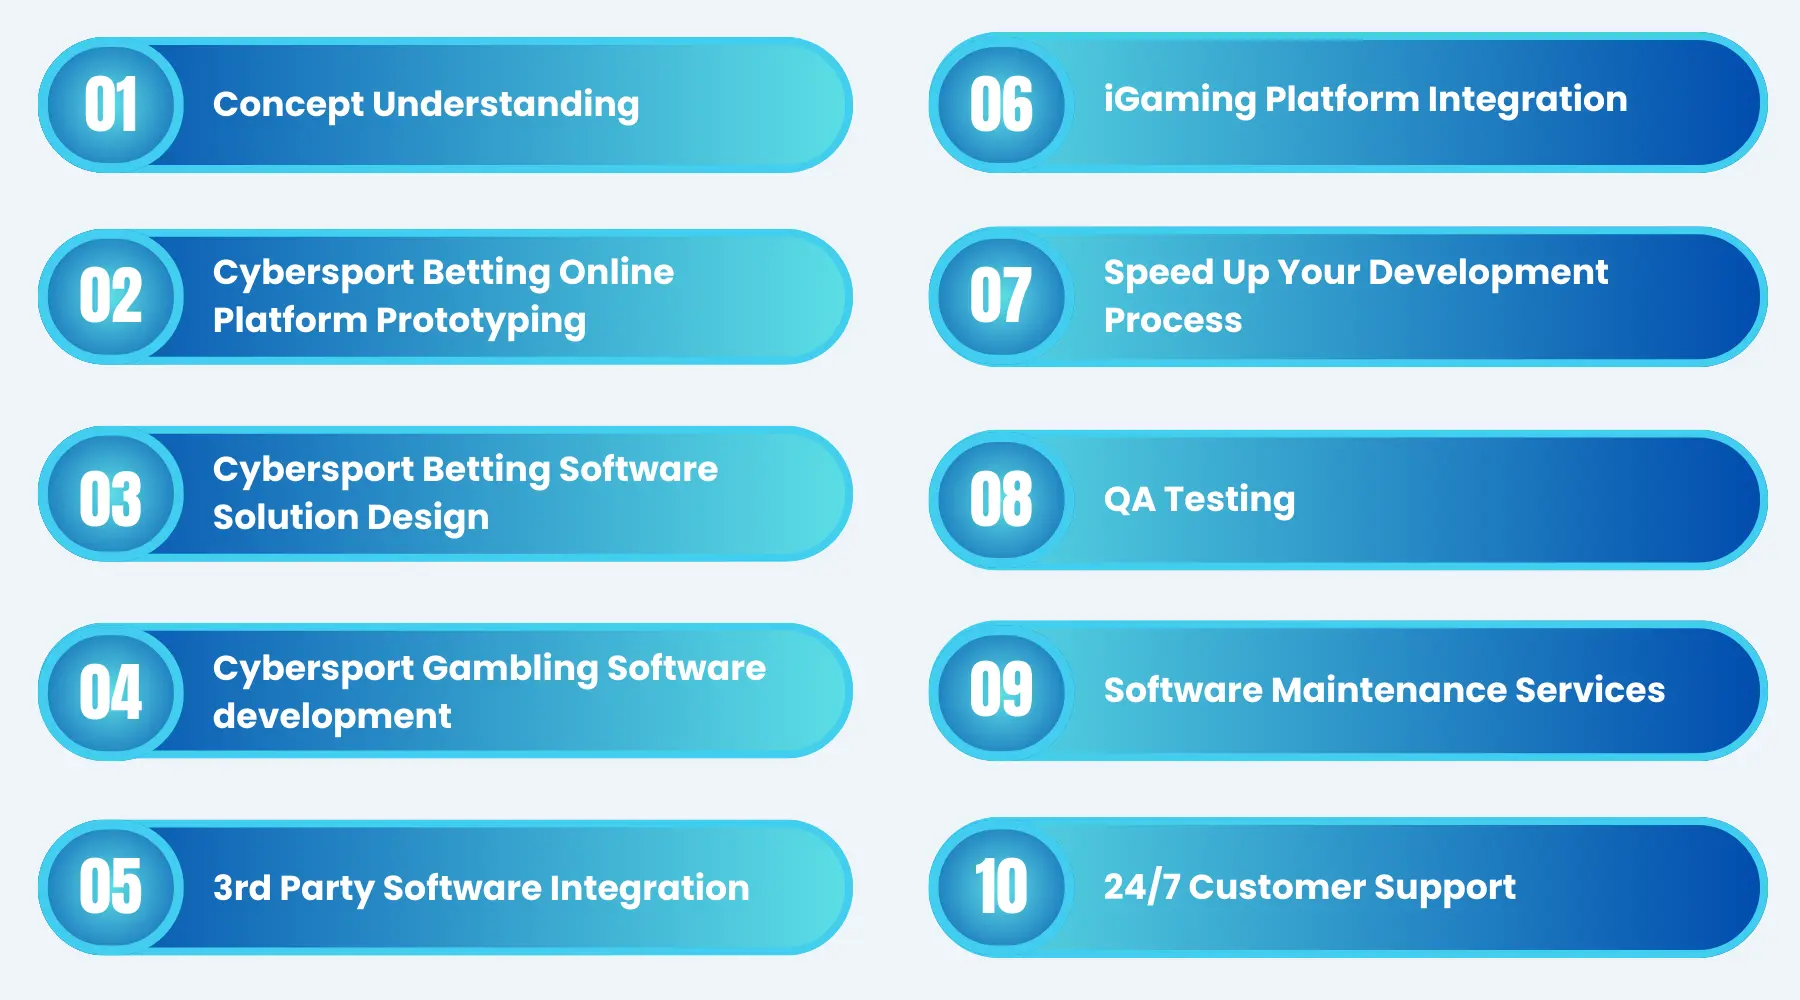 Cybersport Gambling Software Provider